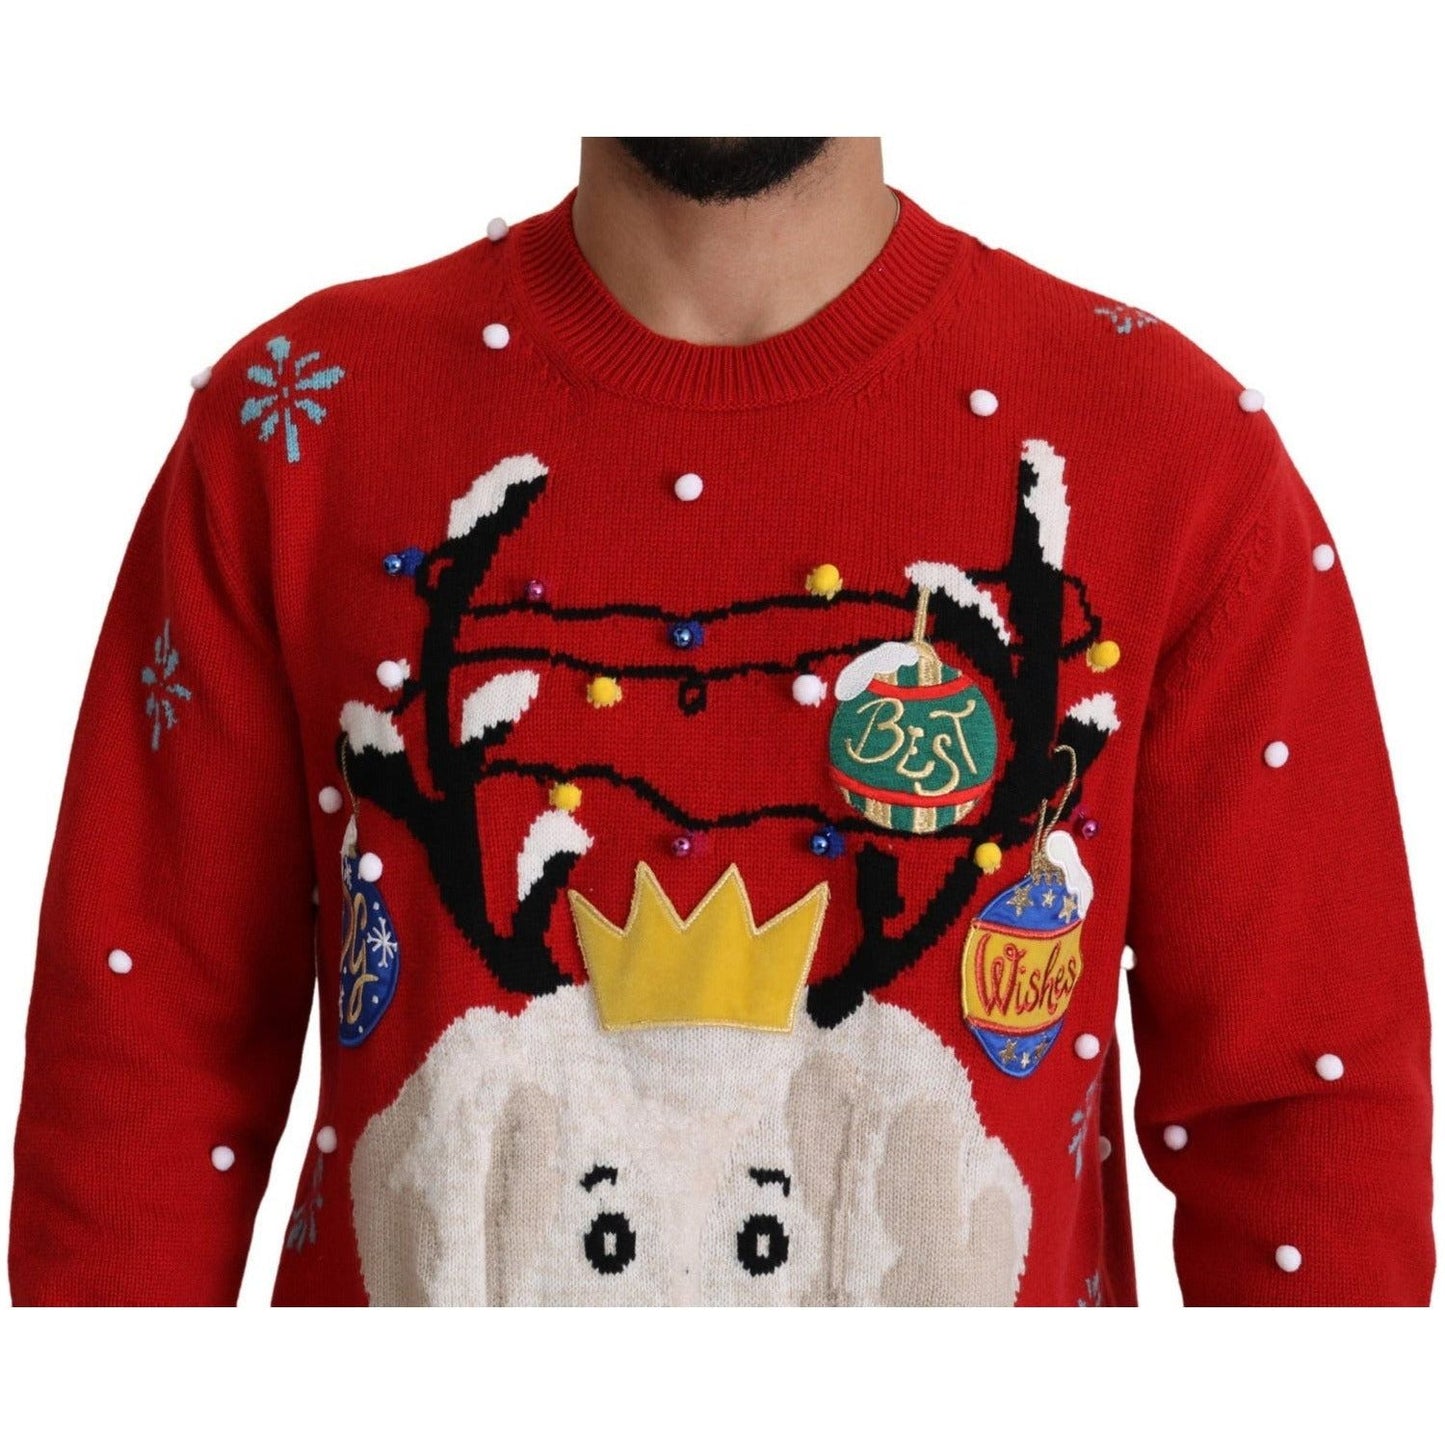 Dolce & Gabbana Elegant Christmas Cashmere Sweater red-christmas-dog-pullover-cashmere-sweater-1